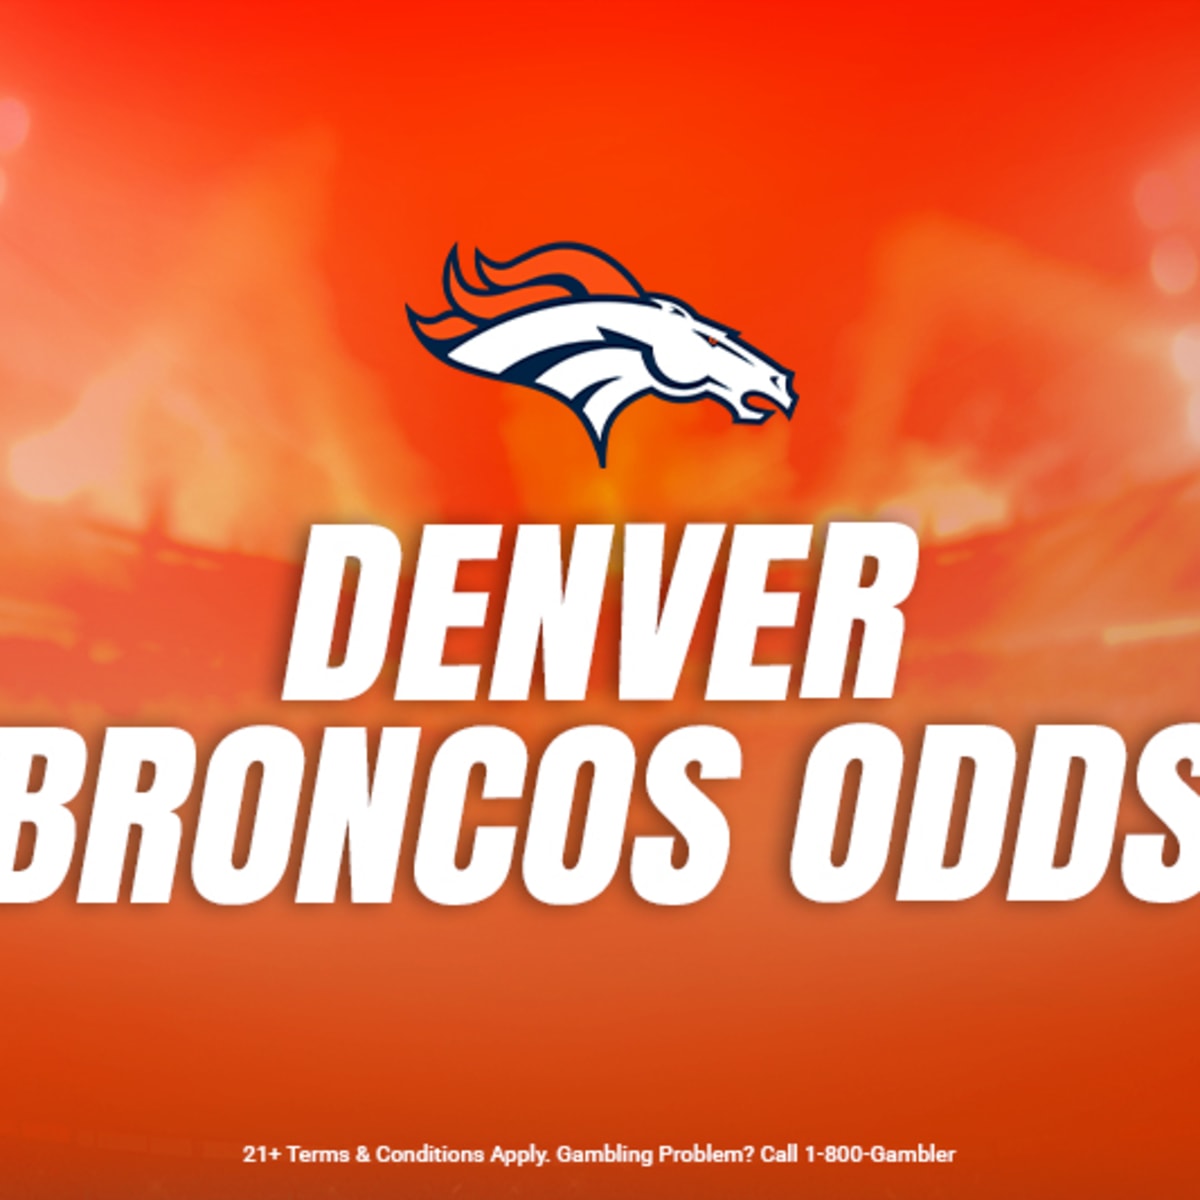 Broncos NFL Betting Odds  Super Bowl, Playoffs & More - Sports Illustrated  Mile High Huddle: Denver Broncos News, Analysis and More